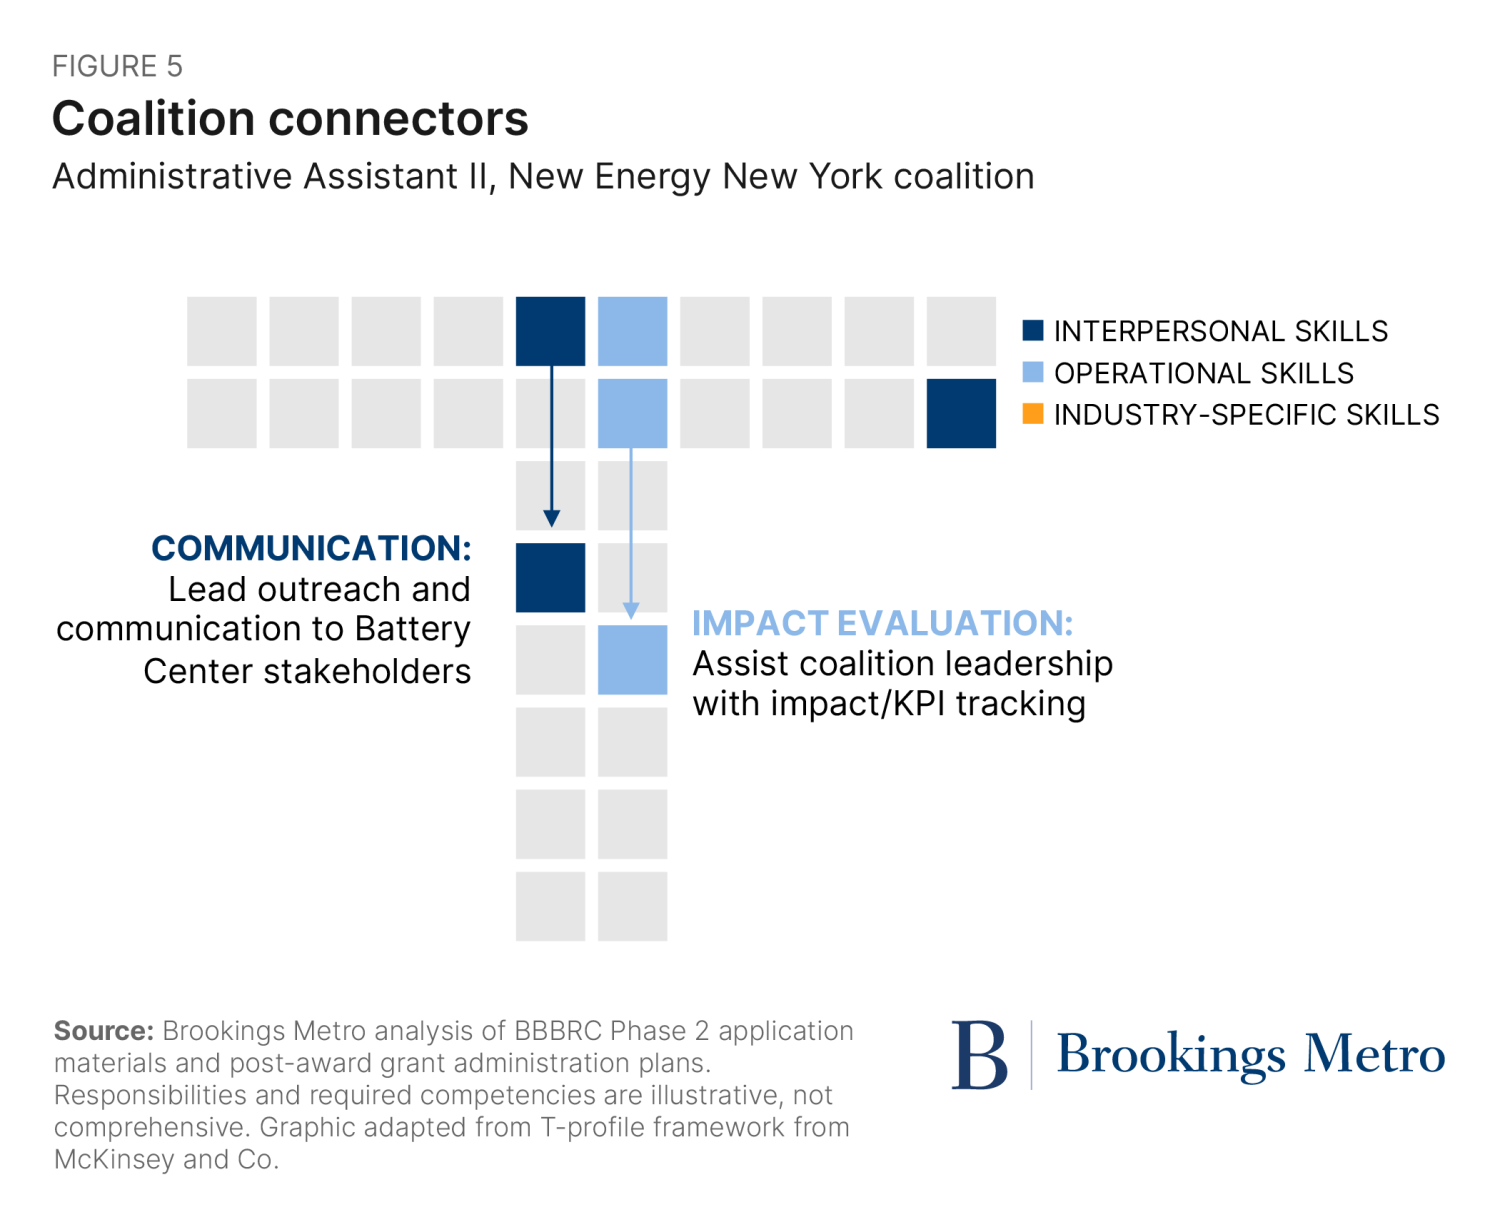 Figure 5. COALITION CONNECTORS Administrative Assistant II, New Energy New York coalition